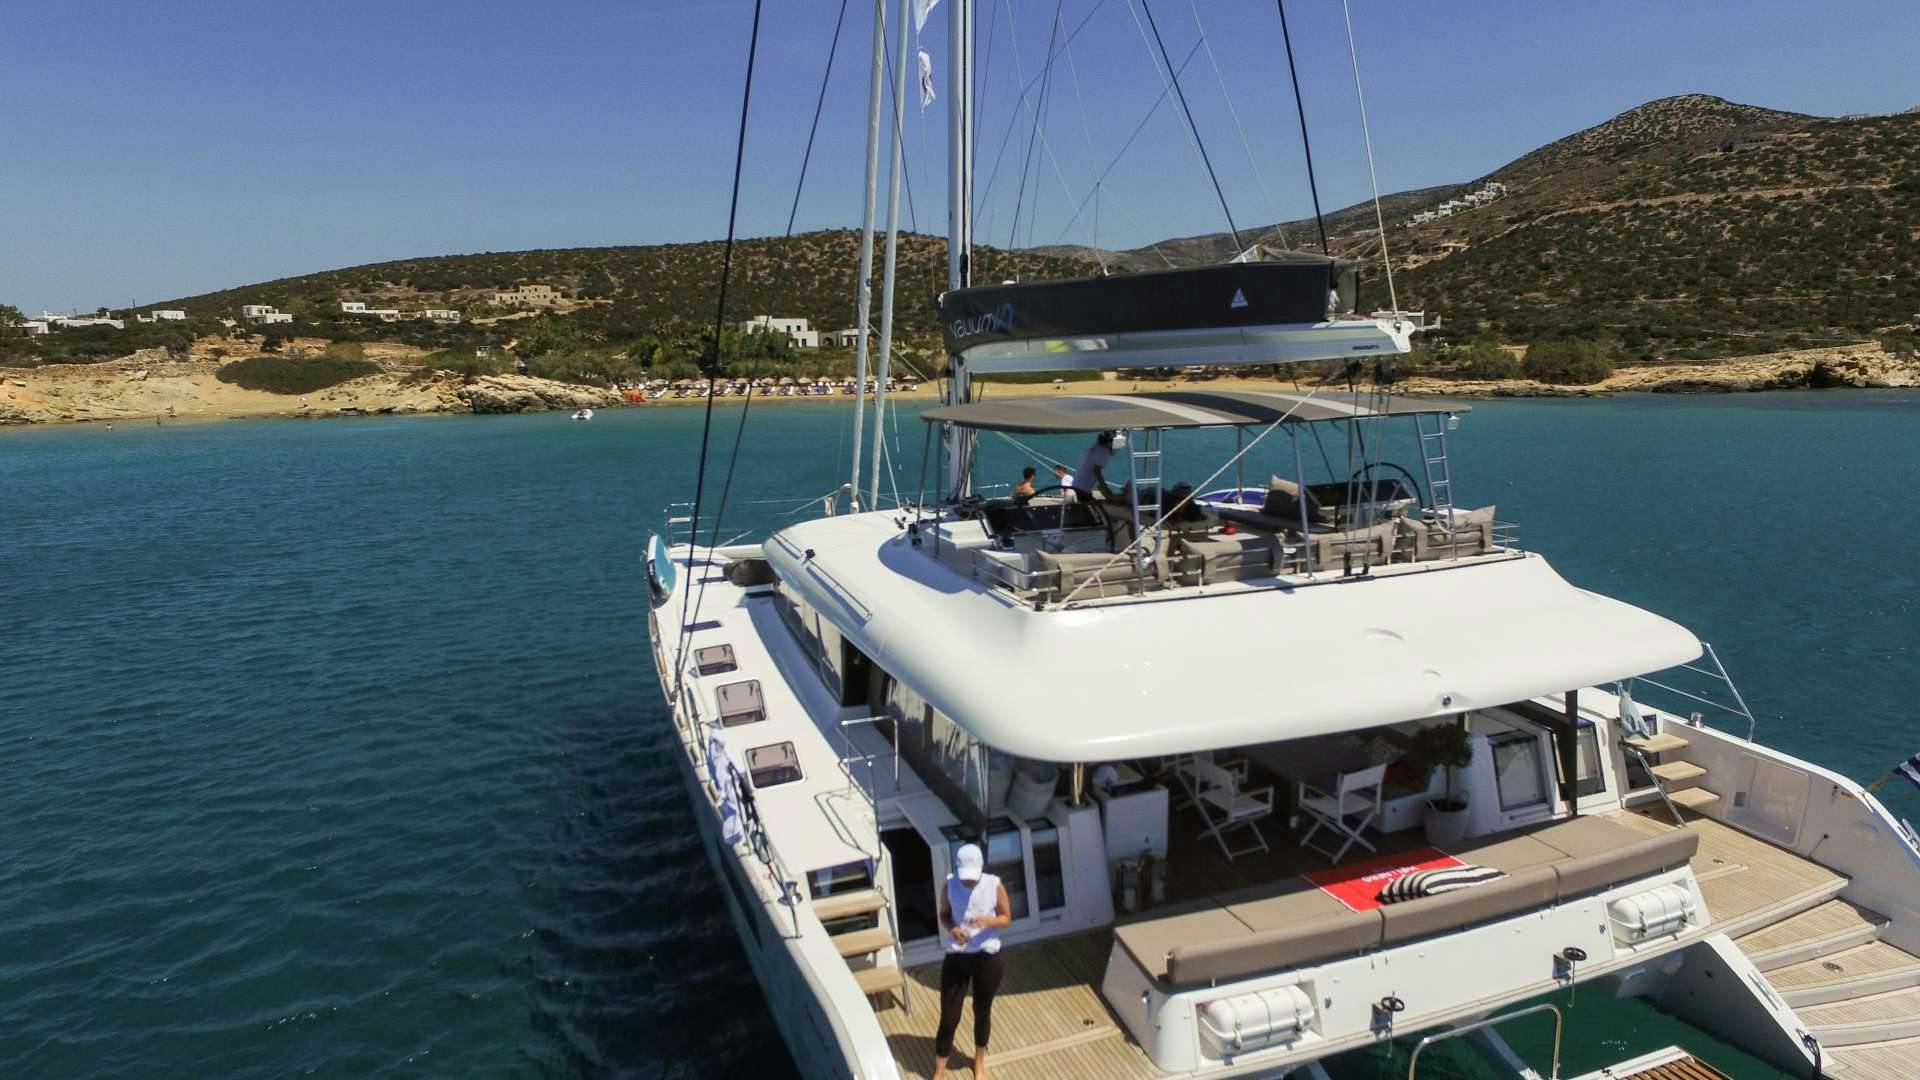 valium62 - Yacht Charter Majorca & Boat hire in Greece 1